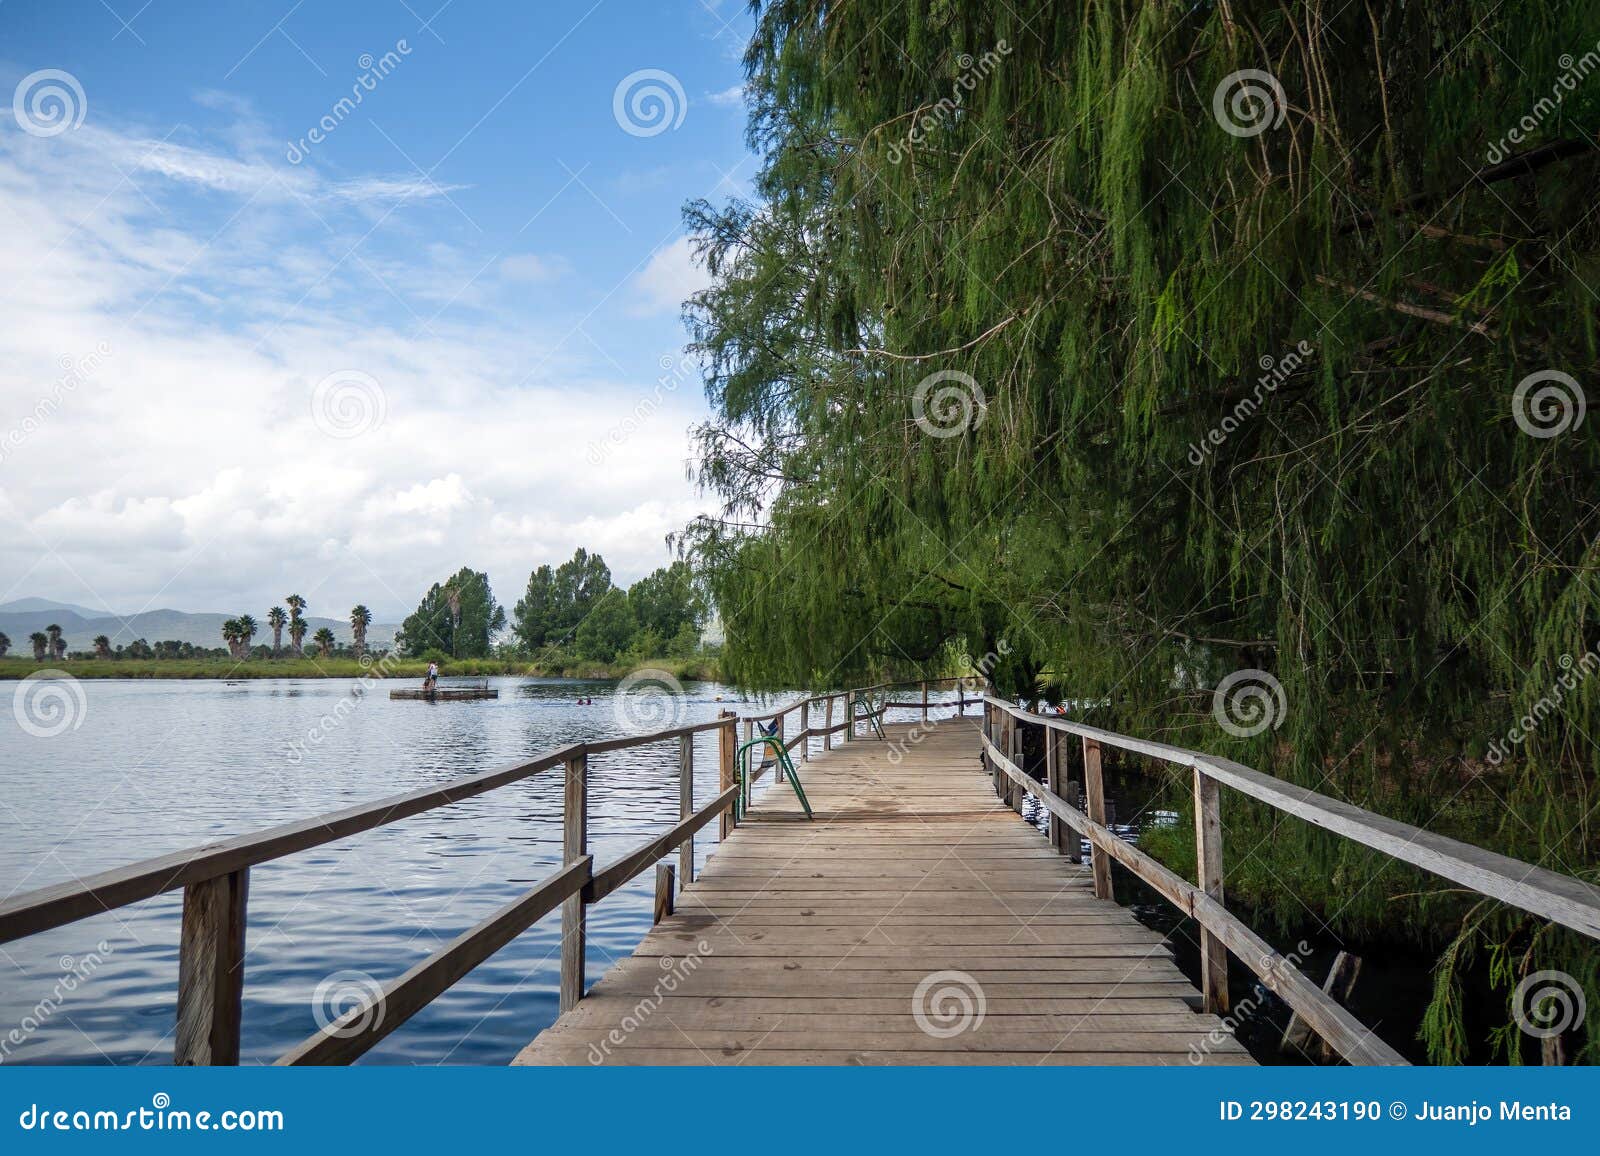 tranquil crossing - wooden bridge over media luna lake